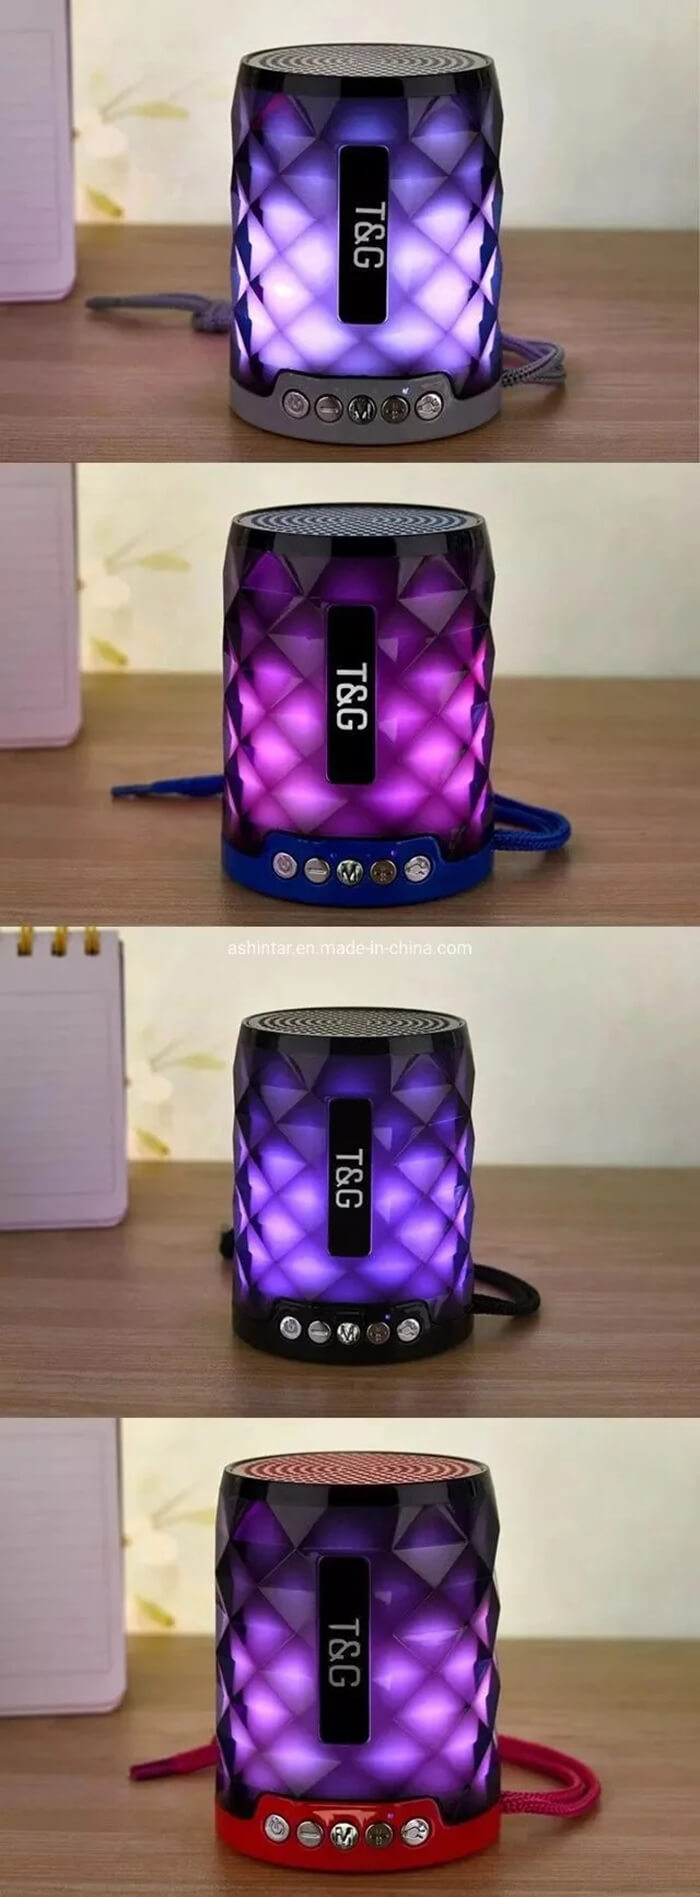 Mini-Blue-Tooth-Wireless-Portable-Colorful-LED-Light-Bluetooth-Speakers.webp (2).jpg